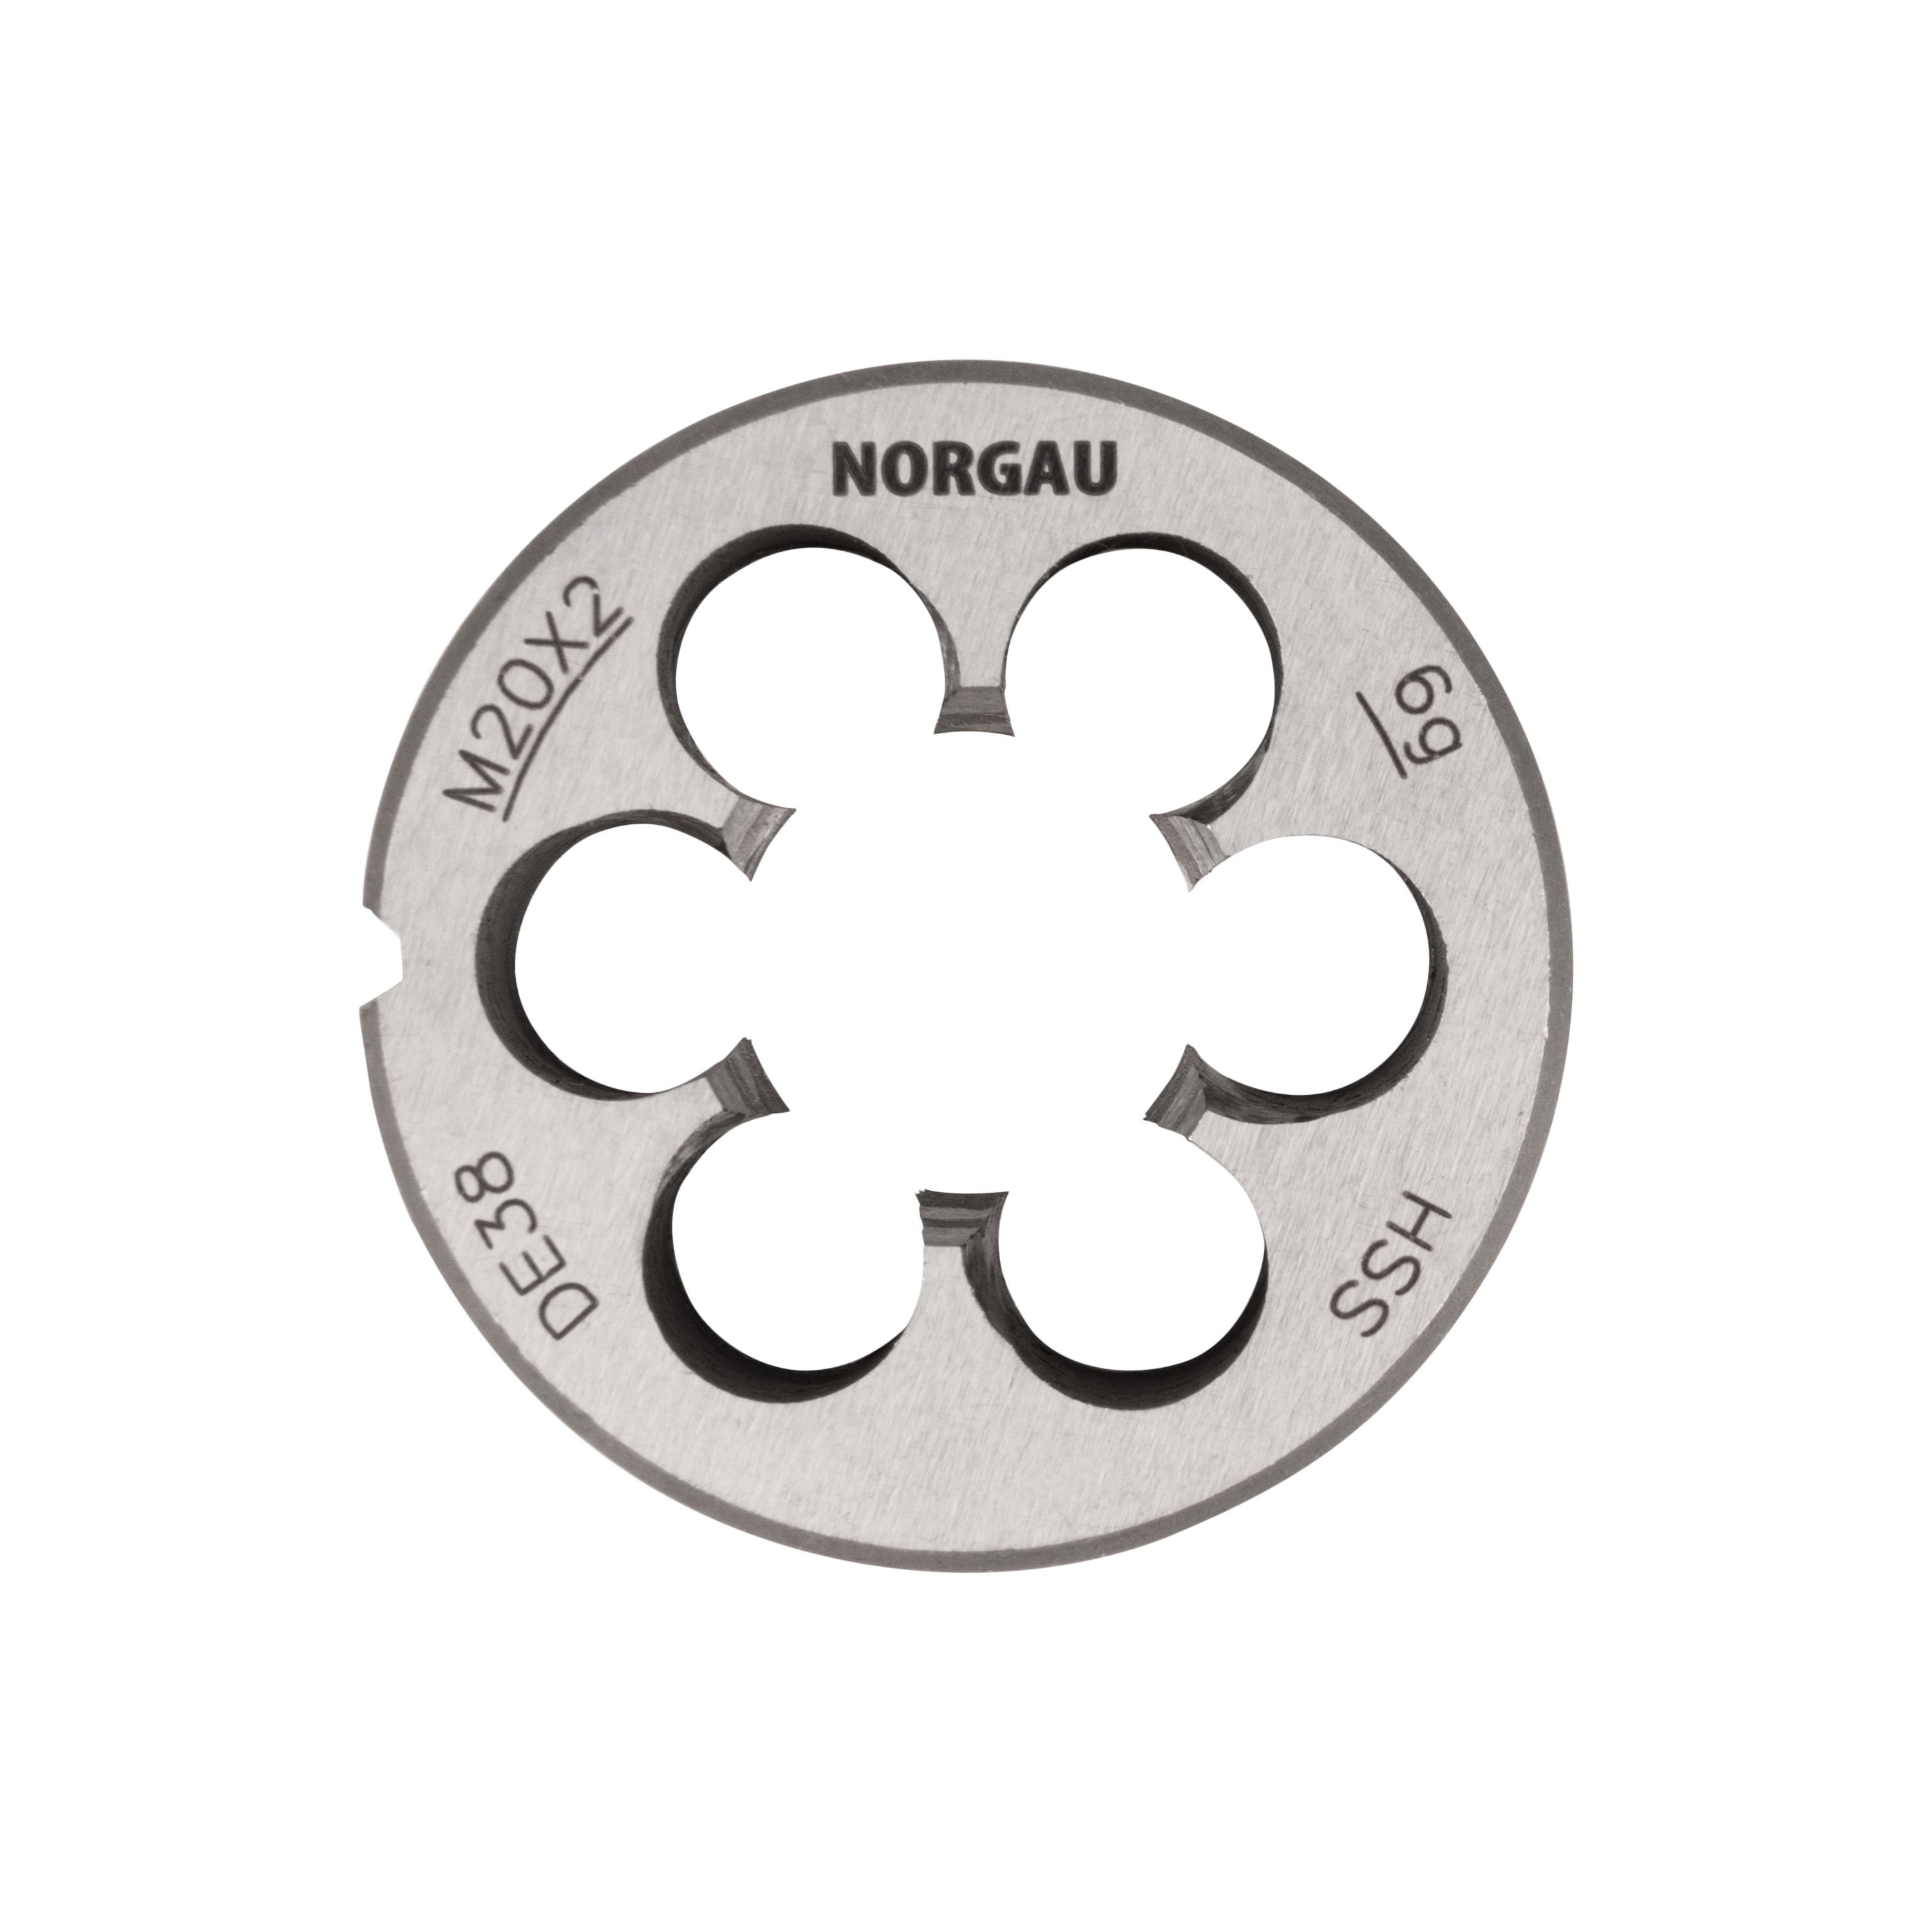 Плашка NORGAU Industrial М20х1.5х45 мм, метрическая, угол 60°, по DIN223, HSS плашка norgau industrial м20х1 5х45 мм метрическая угол 60° по din223 hss